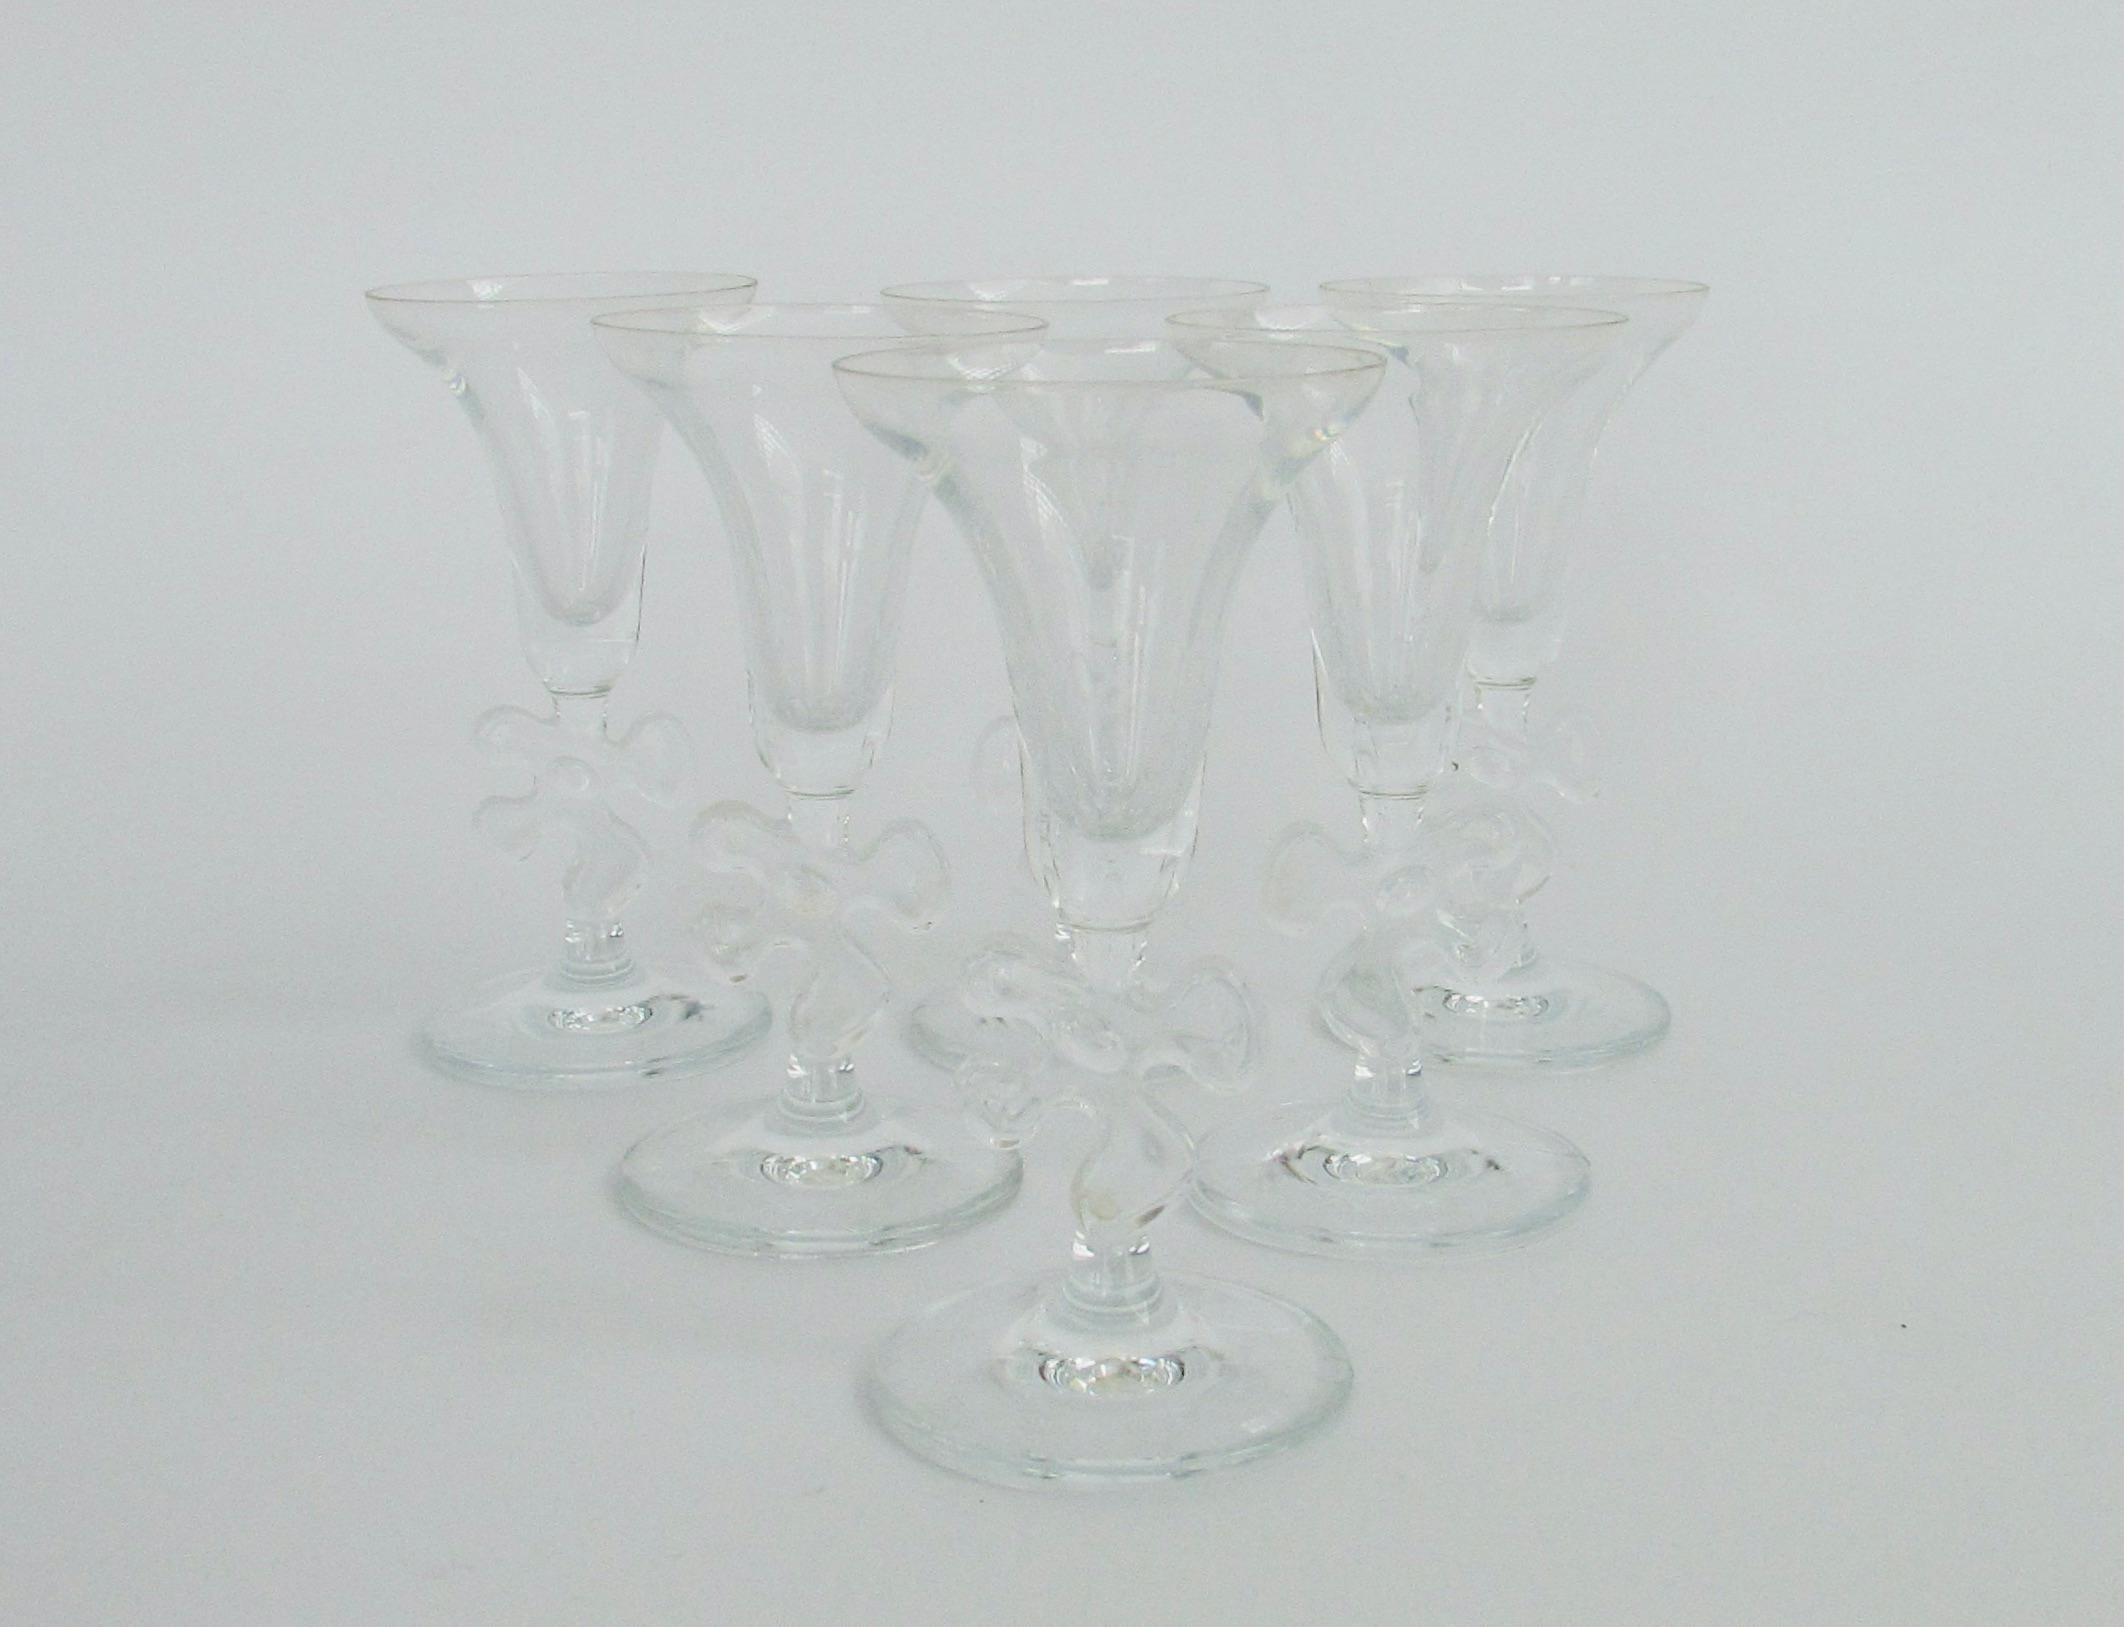 Six Elegant and whimsical cordial or aperitif glasses designed by Marc Aurel . Bell shaped glass on biomorphic jig saw stem . Acid stamped Marc Aurel .